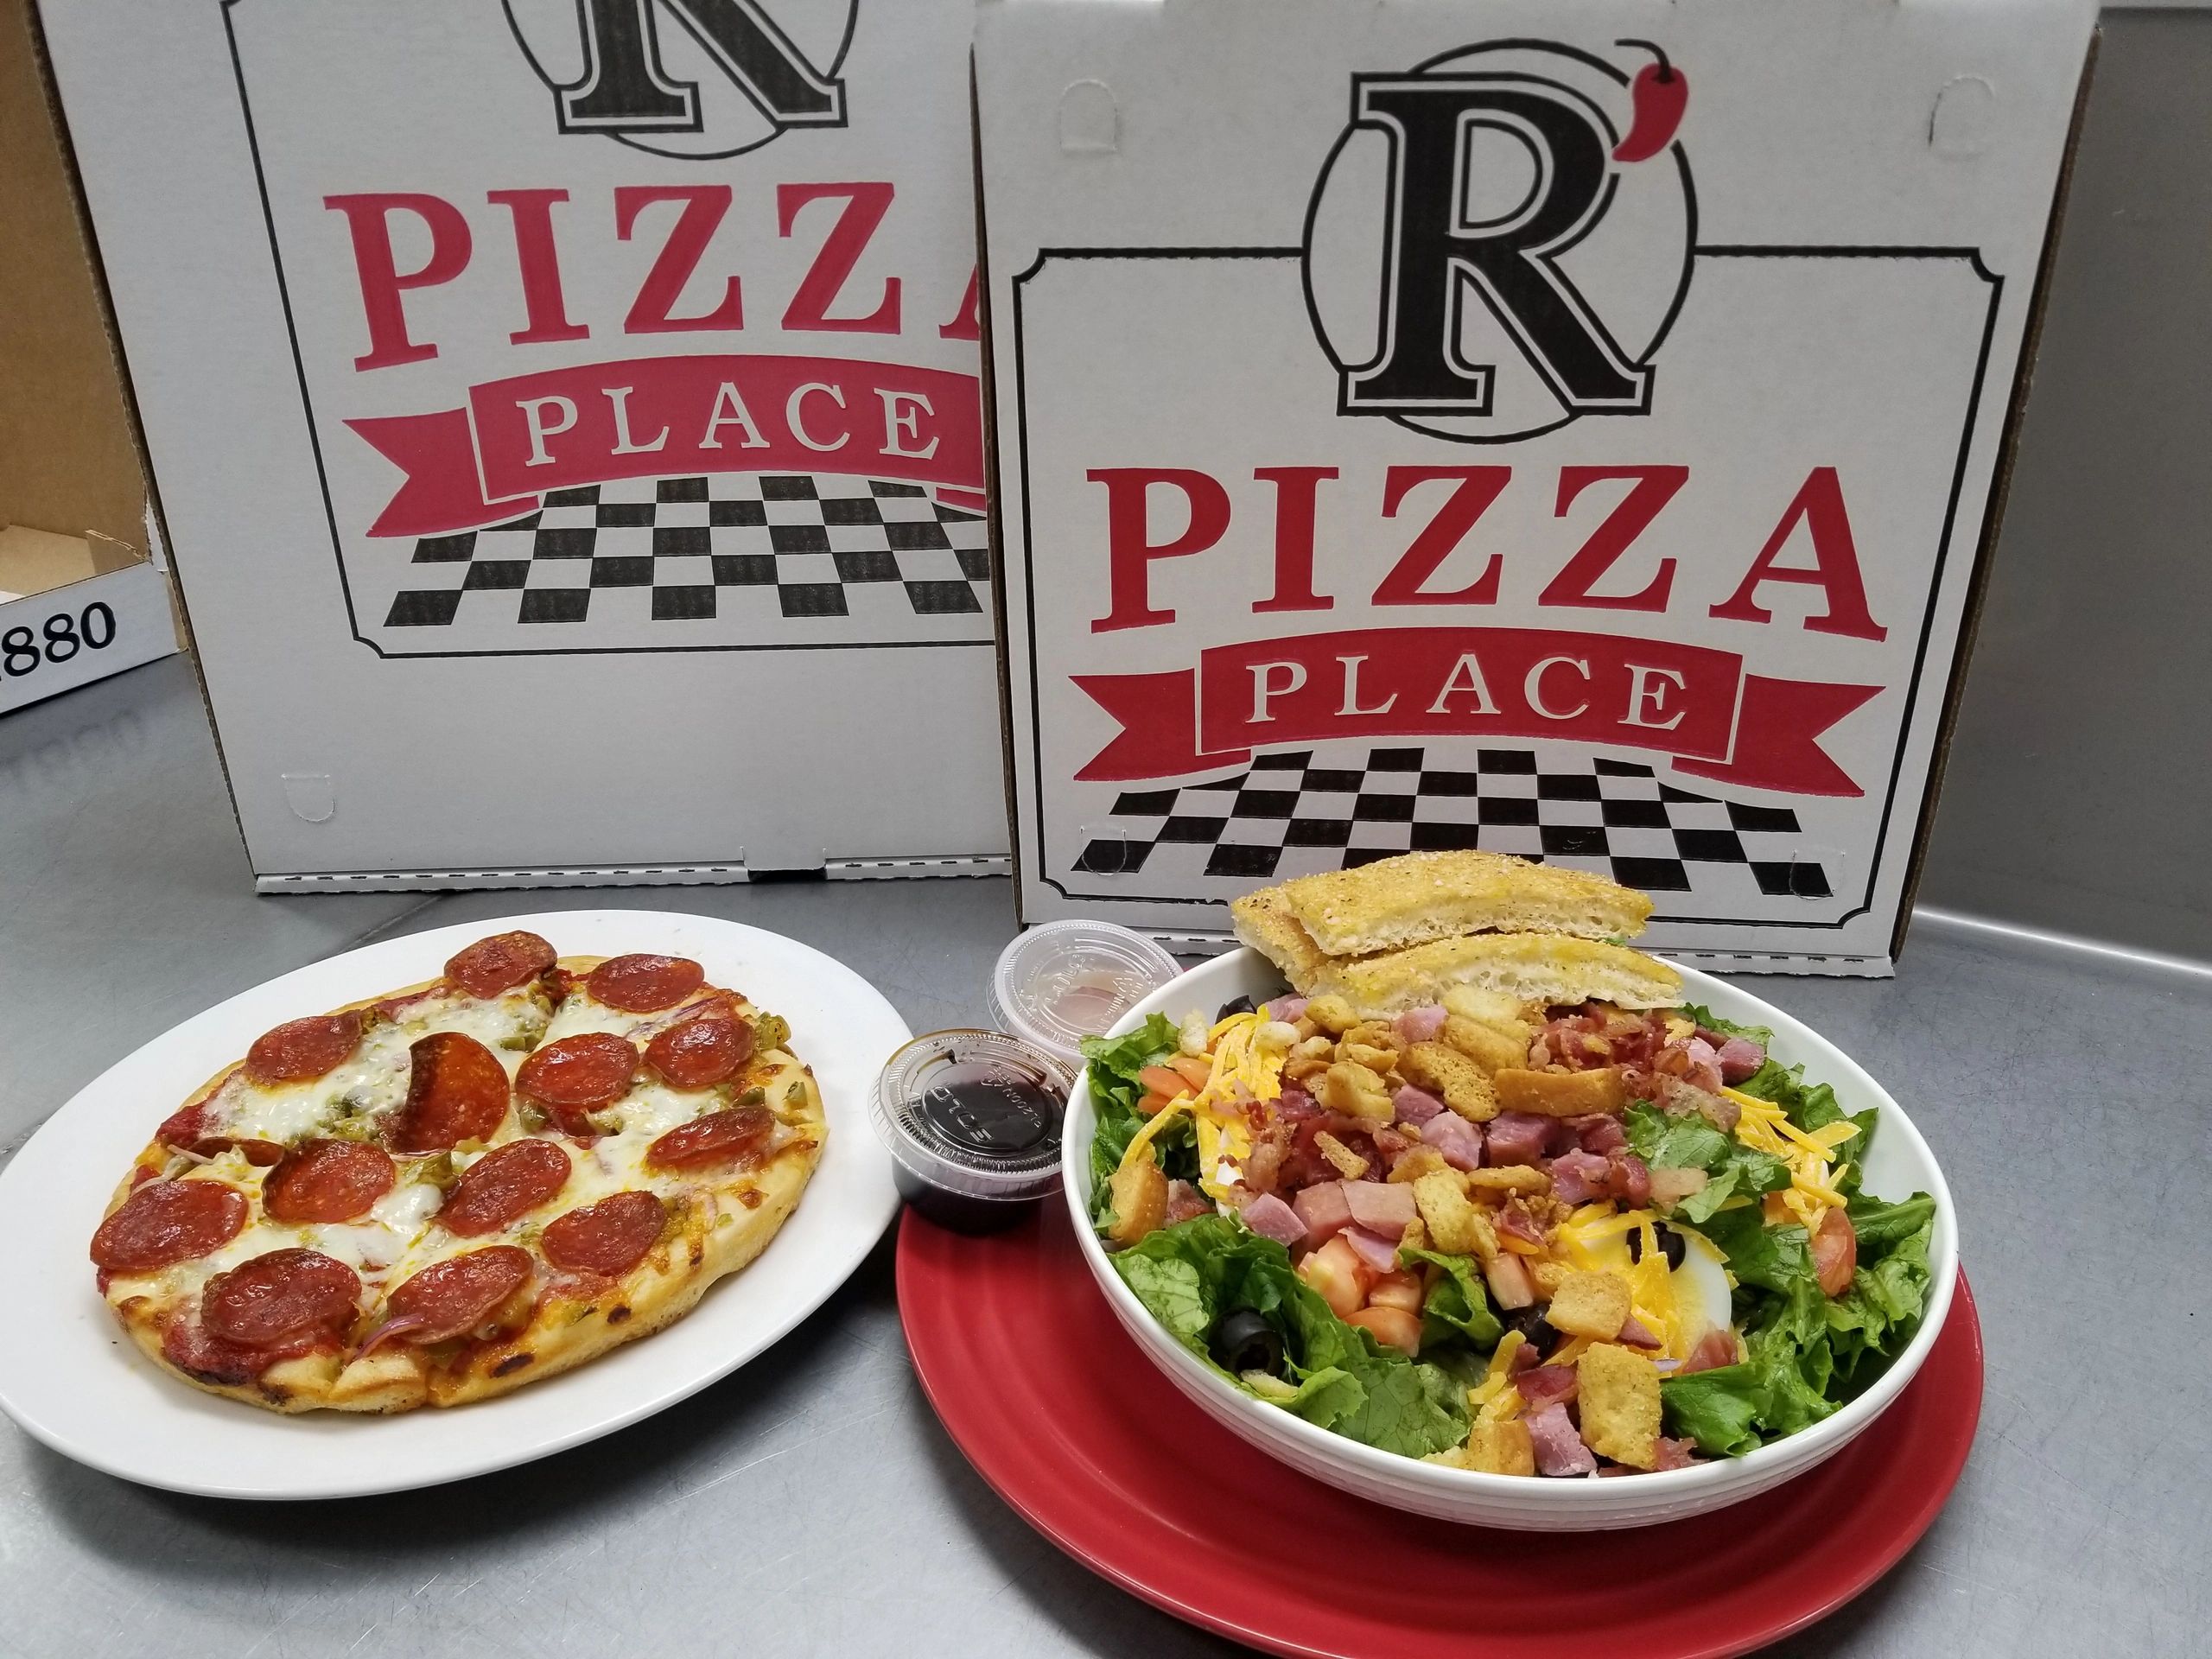 R Pizza Place - Pizza - Columbiana, Ohio